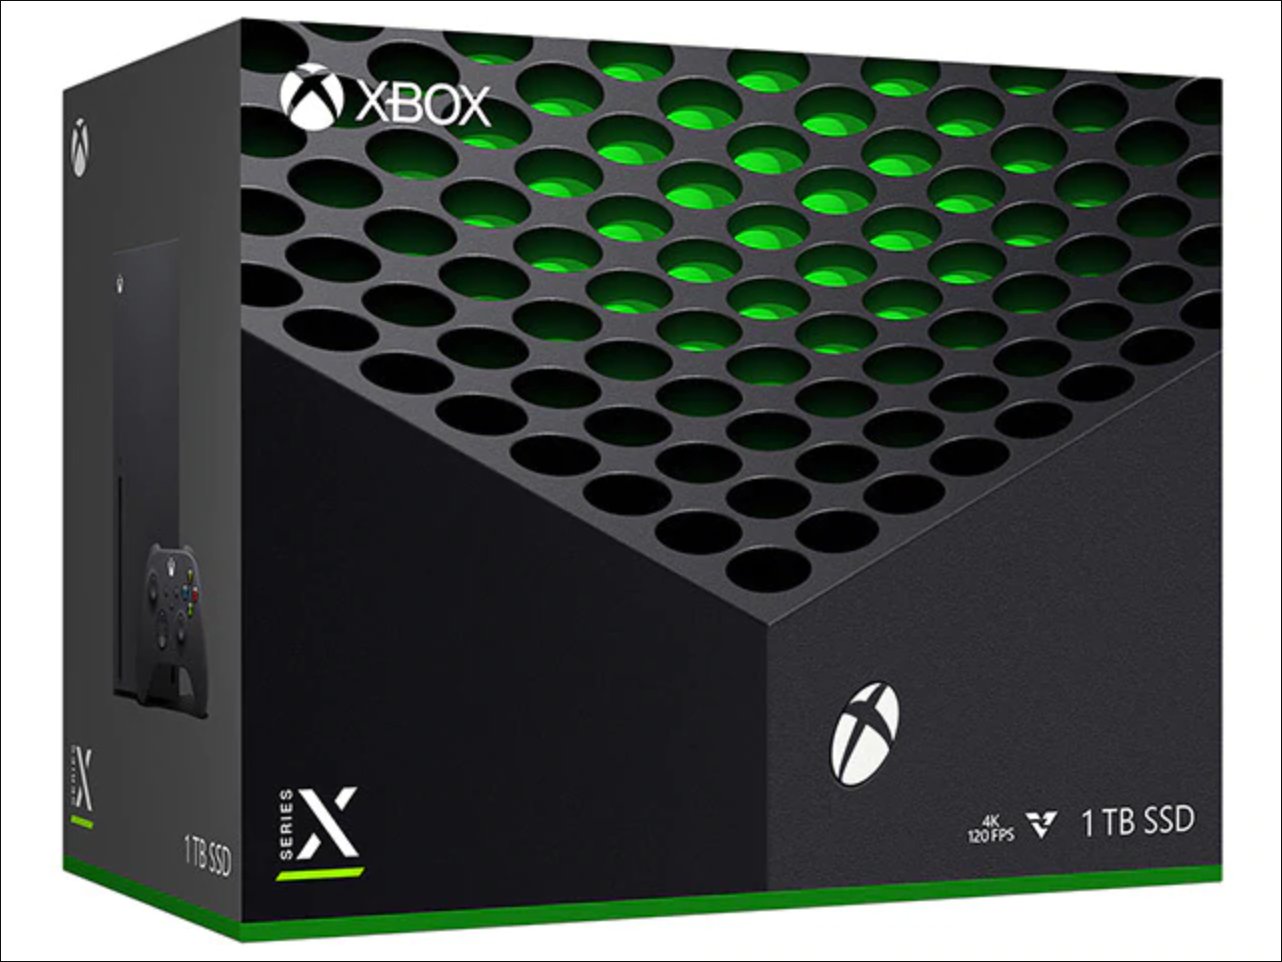 Caixa do Xbox Series X